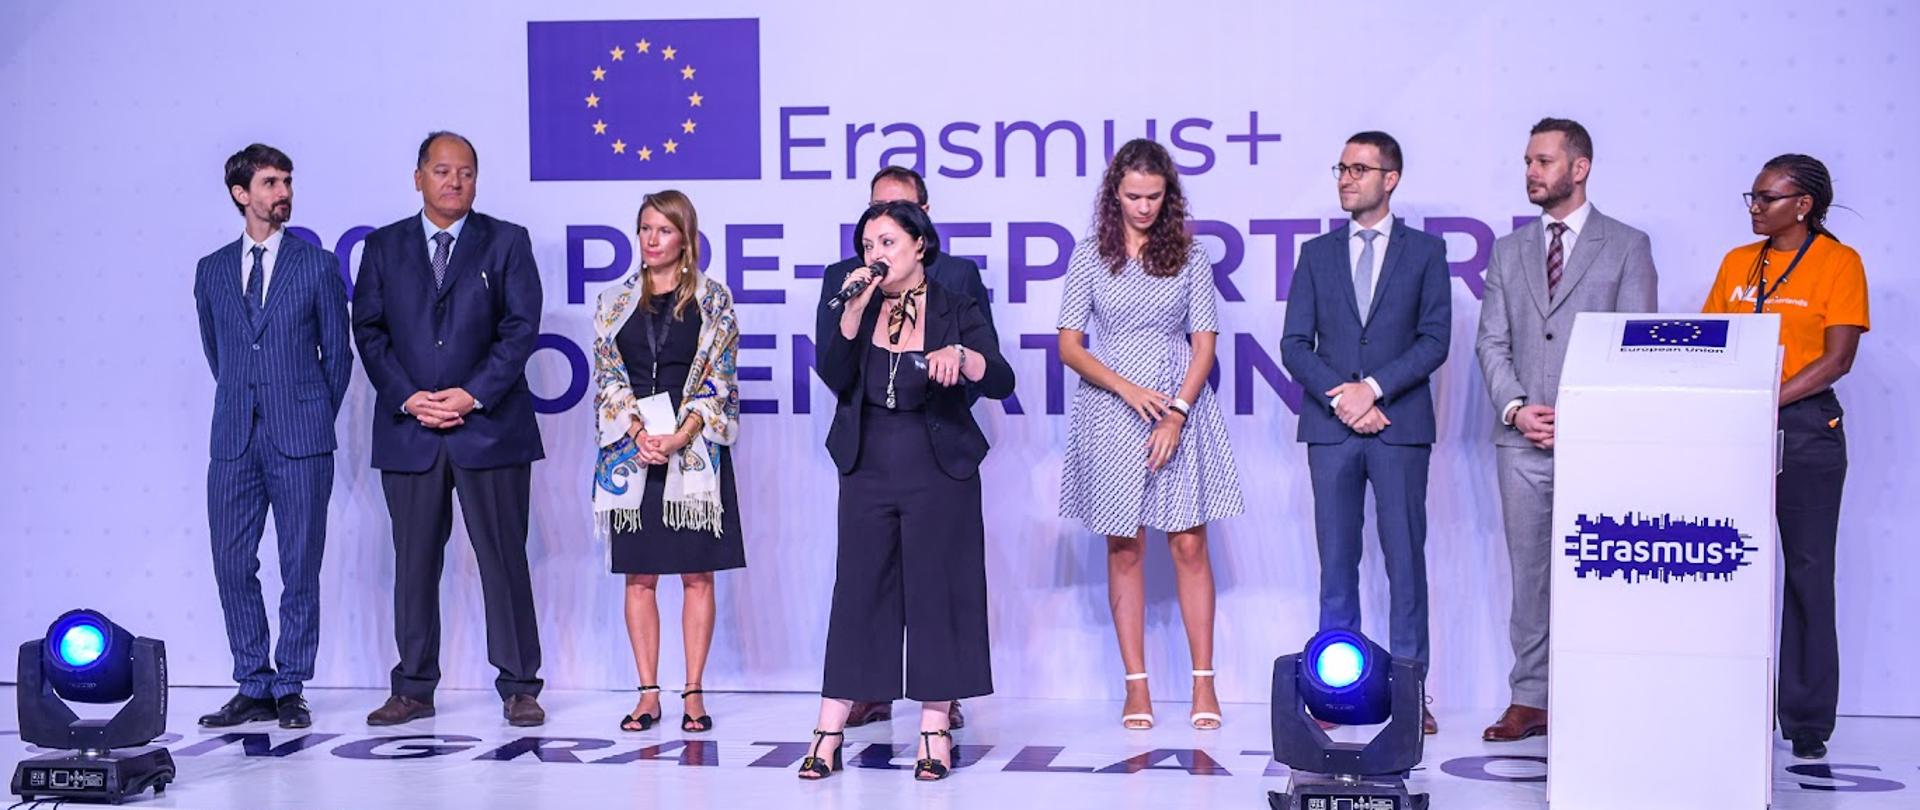 European Union Ambassador speech in the company of representatives of member states, including Poland